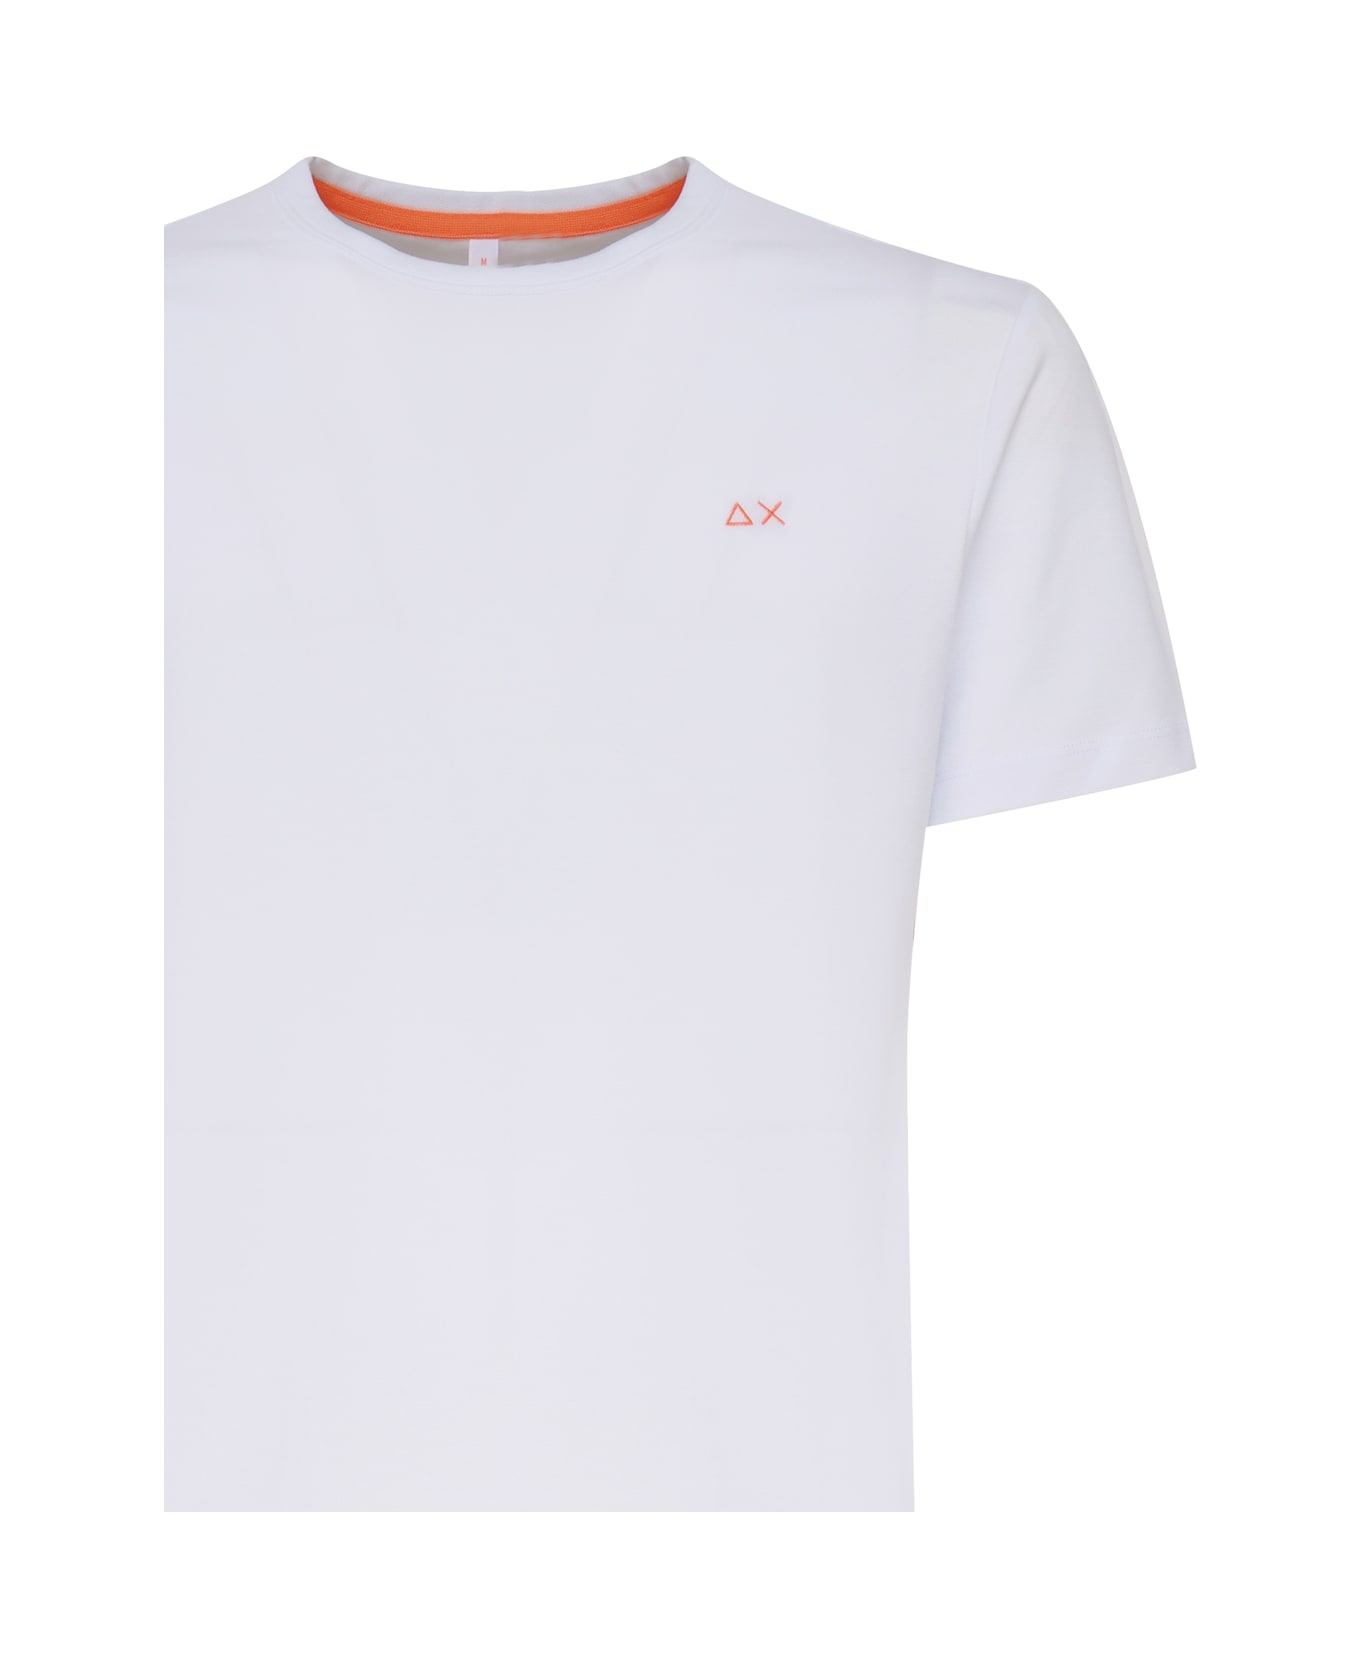 Sun 68 T-shirt With Logo - White シャツ